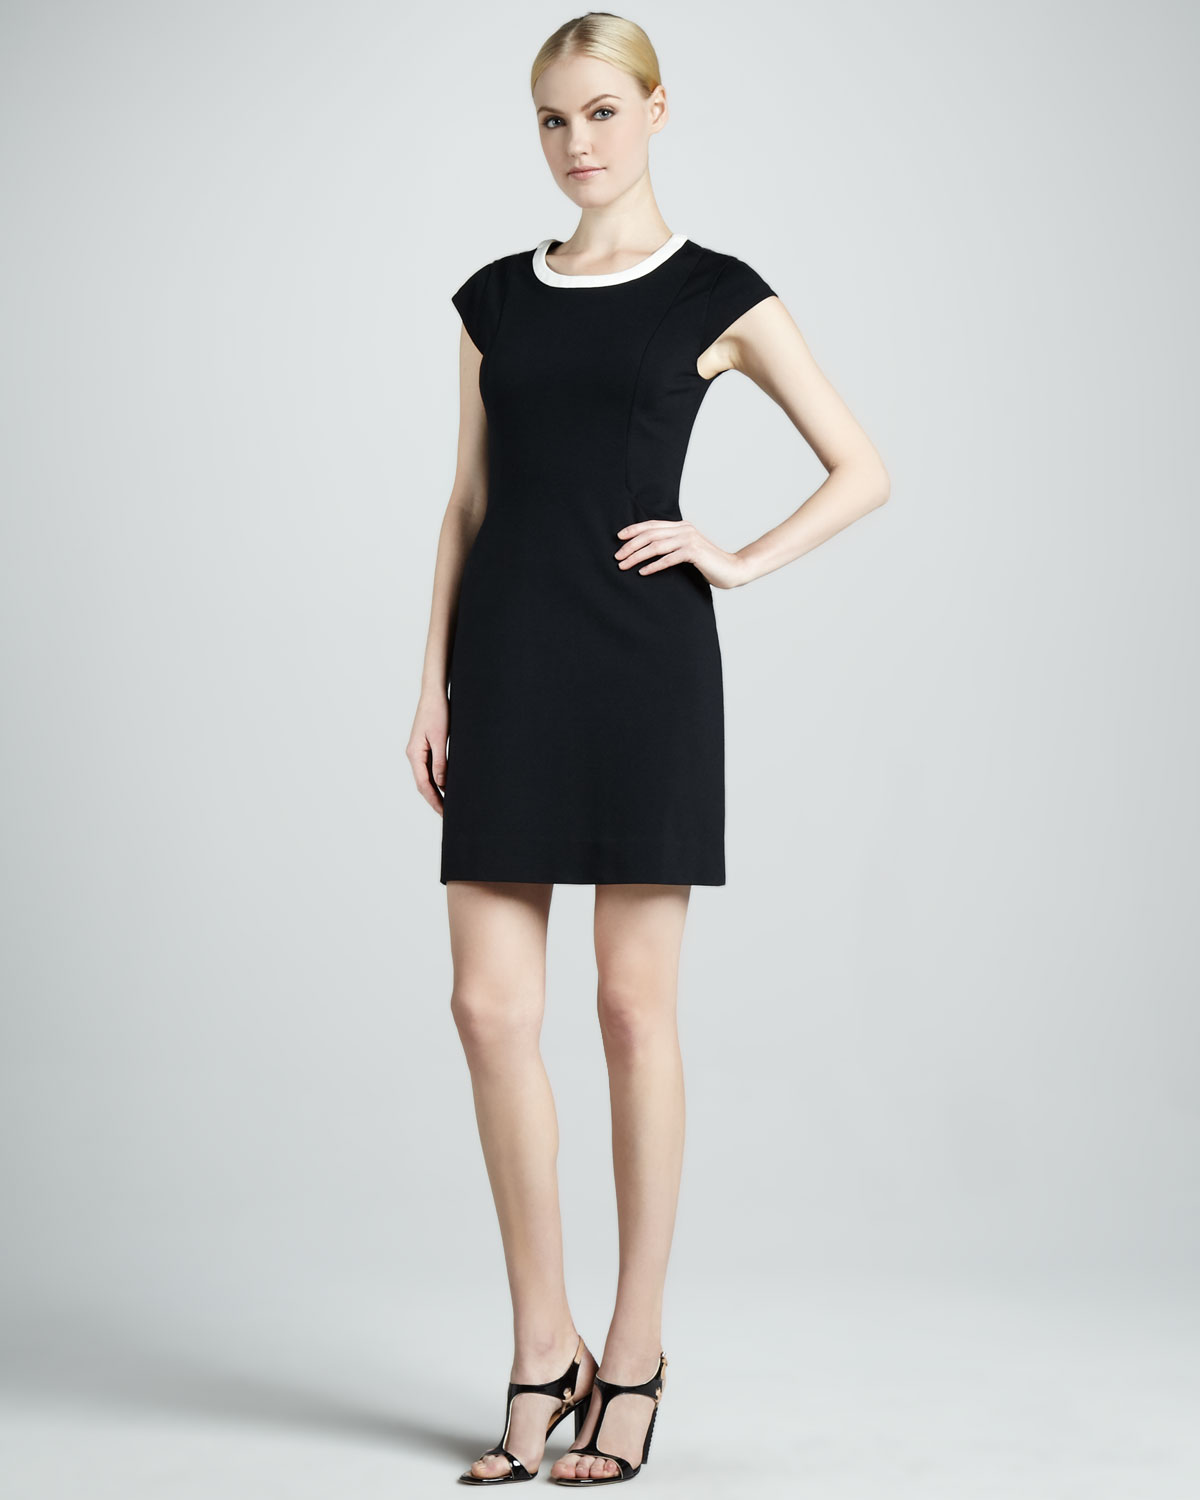 Lyst - Kate spade new york Daria Capsleeve Colorblock Dress in Black